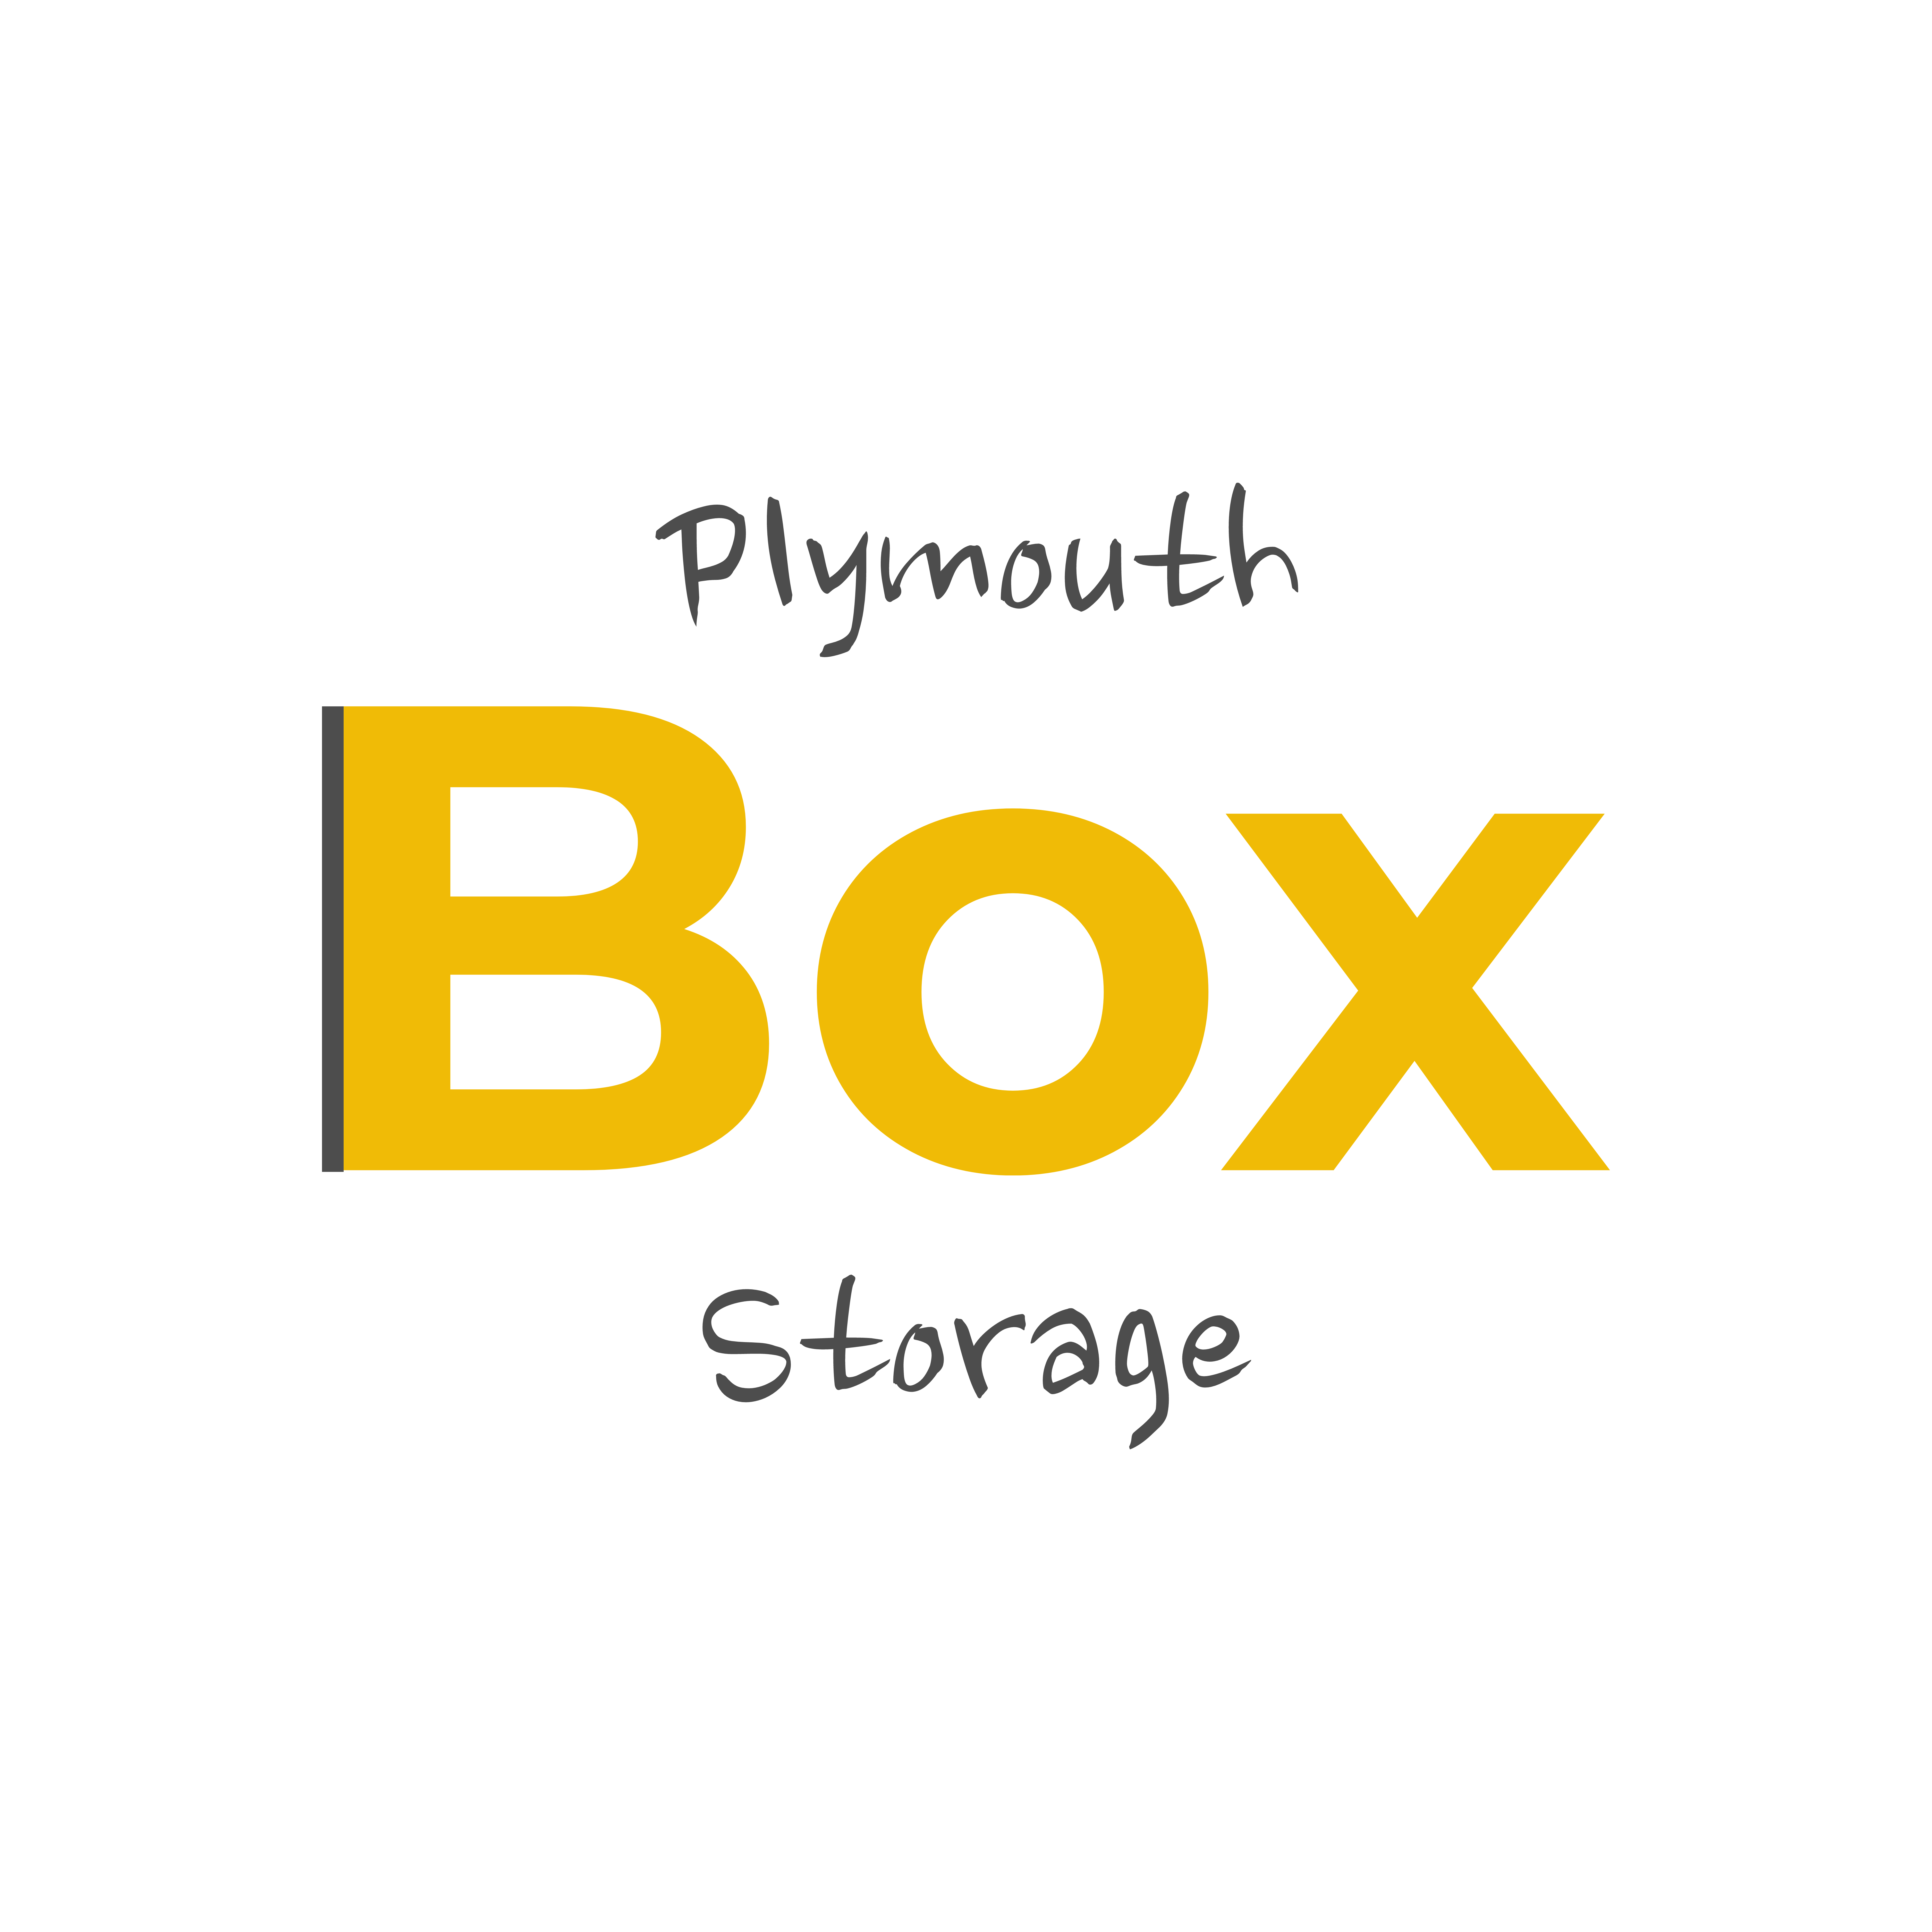 Plymouth Box Storage Logo